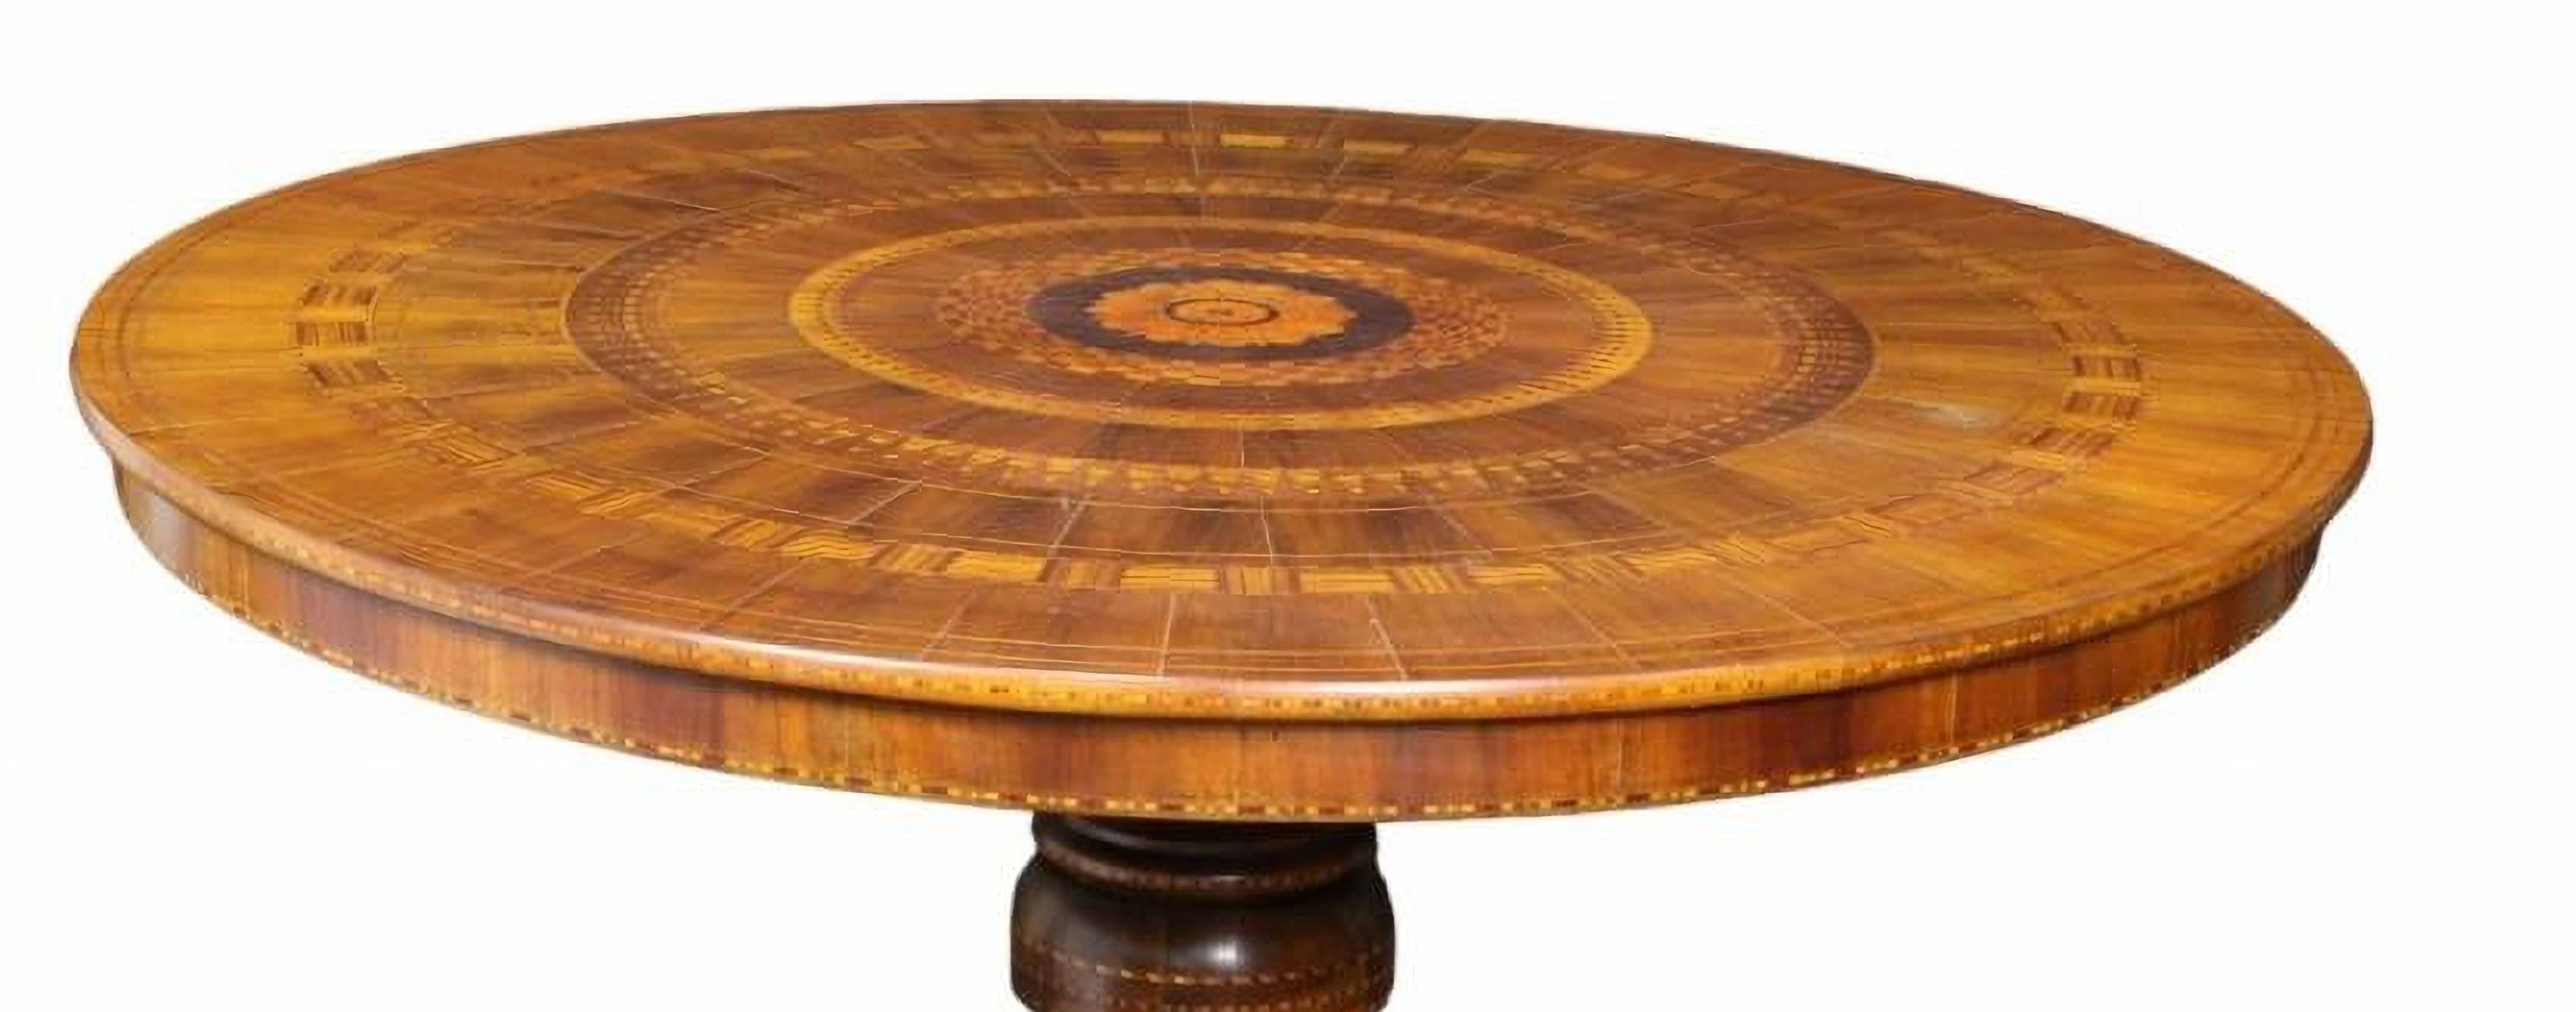 Baroque TABLE CENTRALE ELEGANCE DE  SORRENTO (Sorrento-Naples -Italie) 19ème siècle en vente